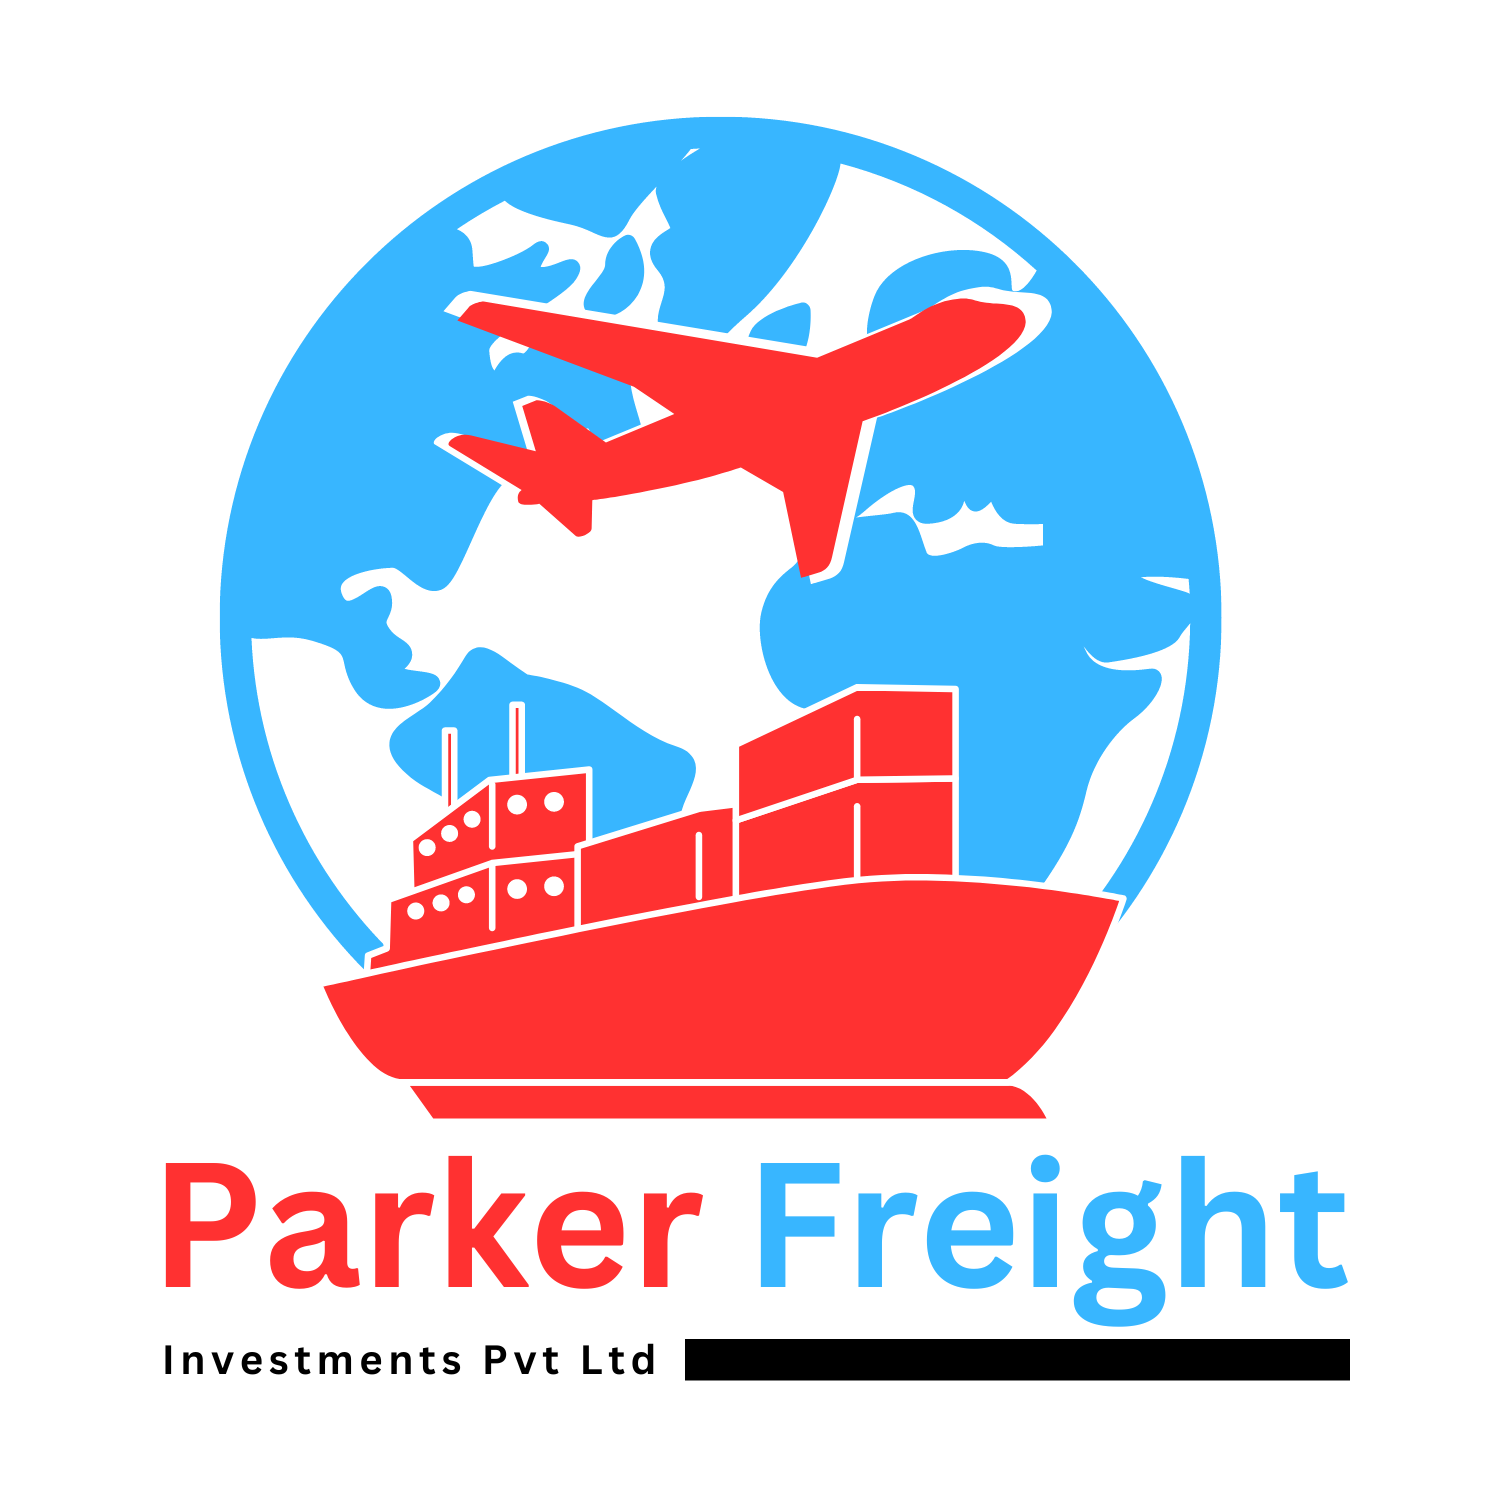 Parker Freight